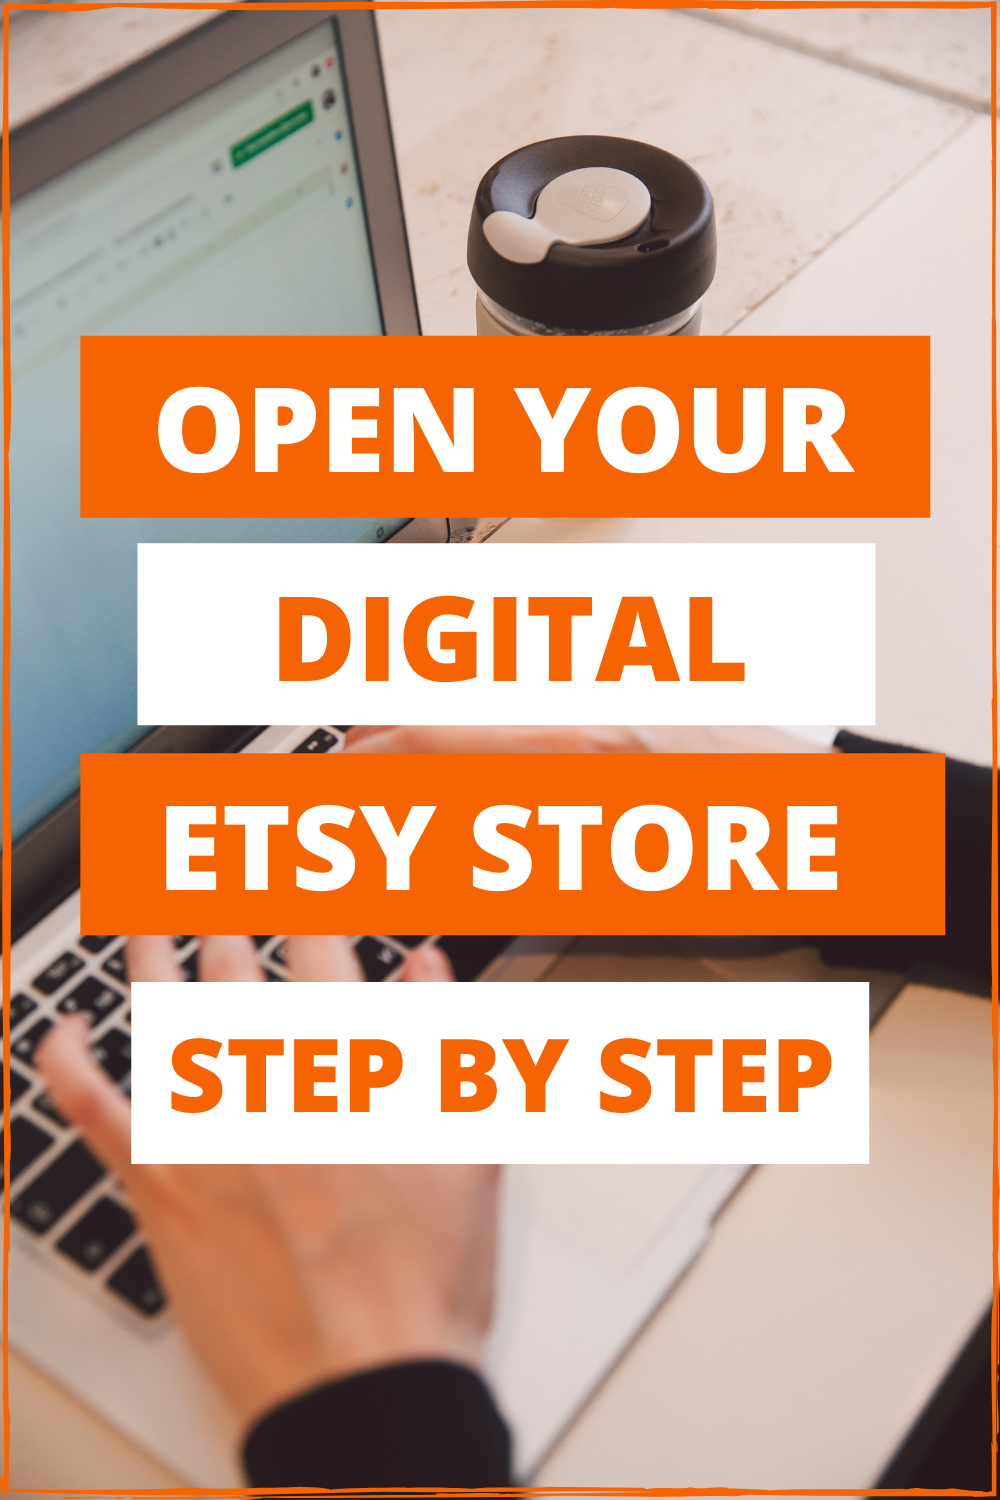 Launch your Digital Etsy Shop